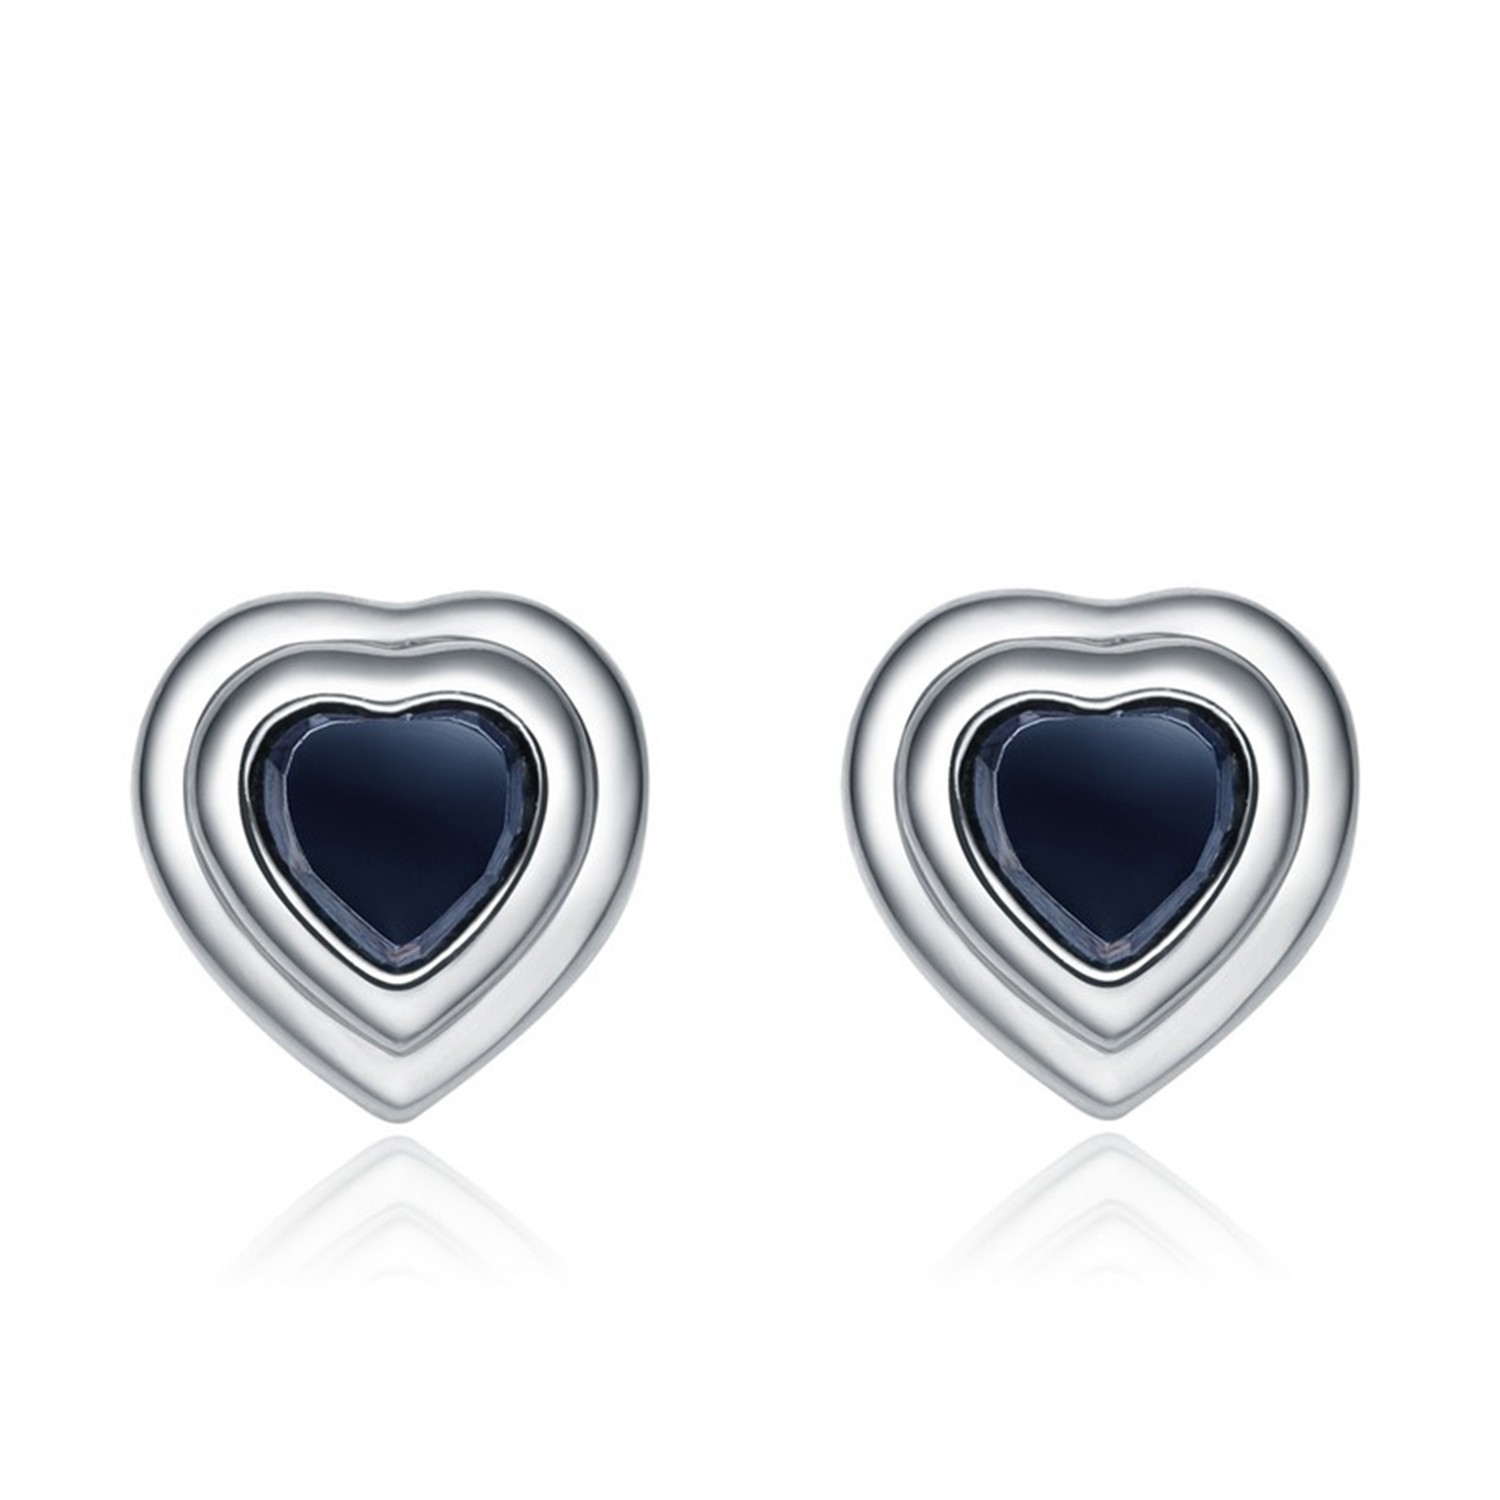 Jewelry Manufacturer 925 sterling silver rhodium plated cz heart stud earrings jewelry women